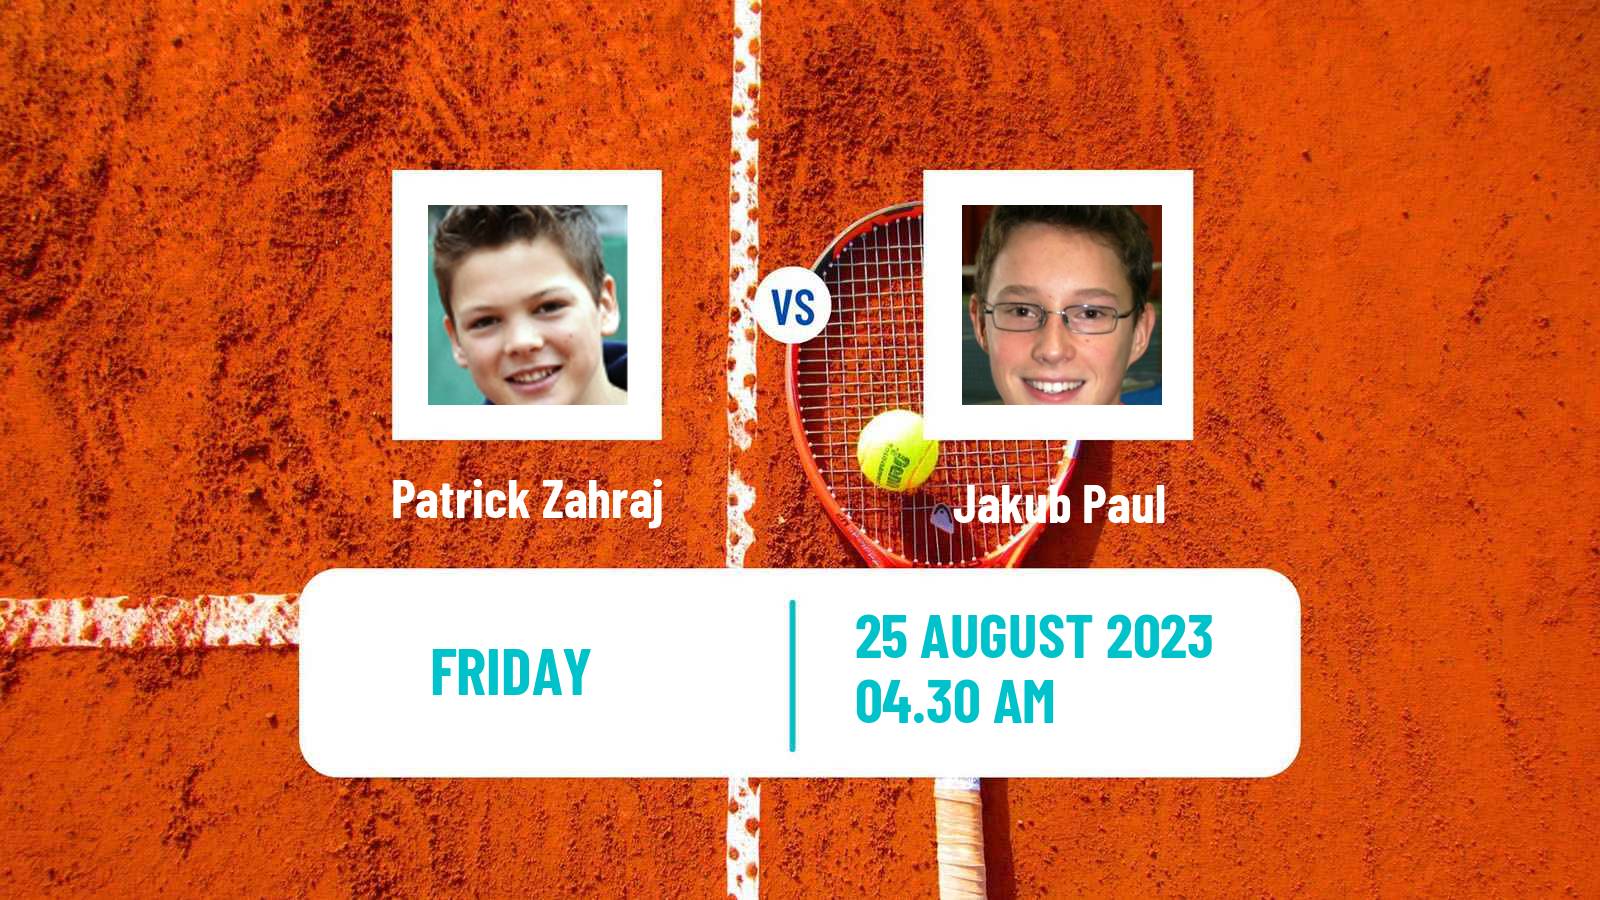 Tennis ITF M15 Caslano Men Patrick Zahraj - Jakub Paul